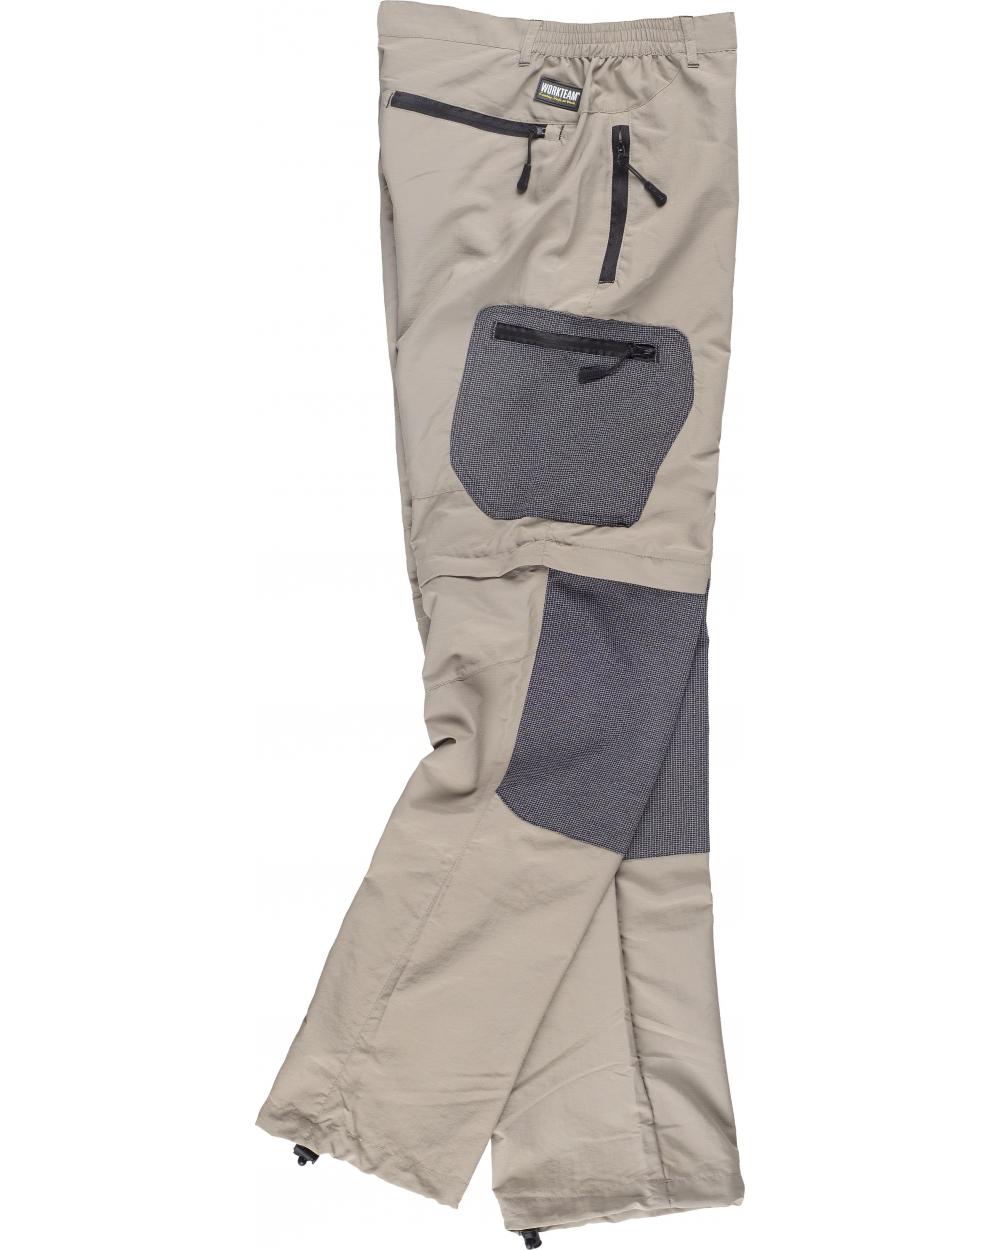 Comprar Pantalon de nylon desmontable S9870 Beige+Negro workteam barato